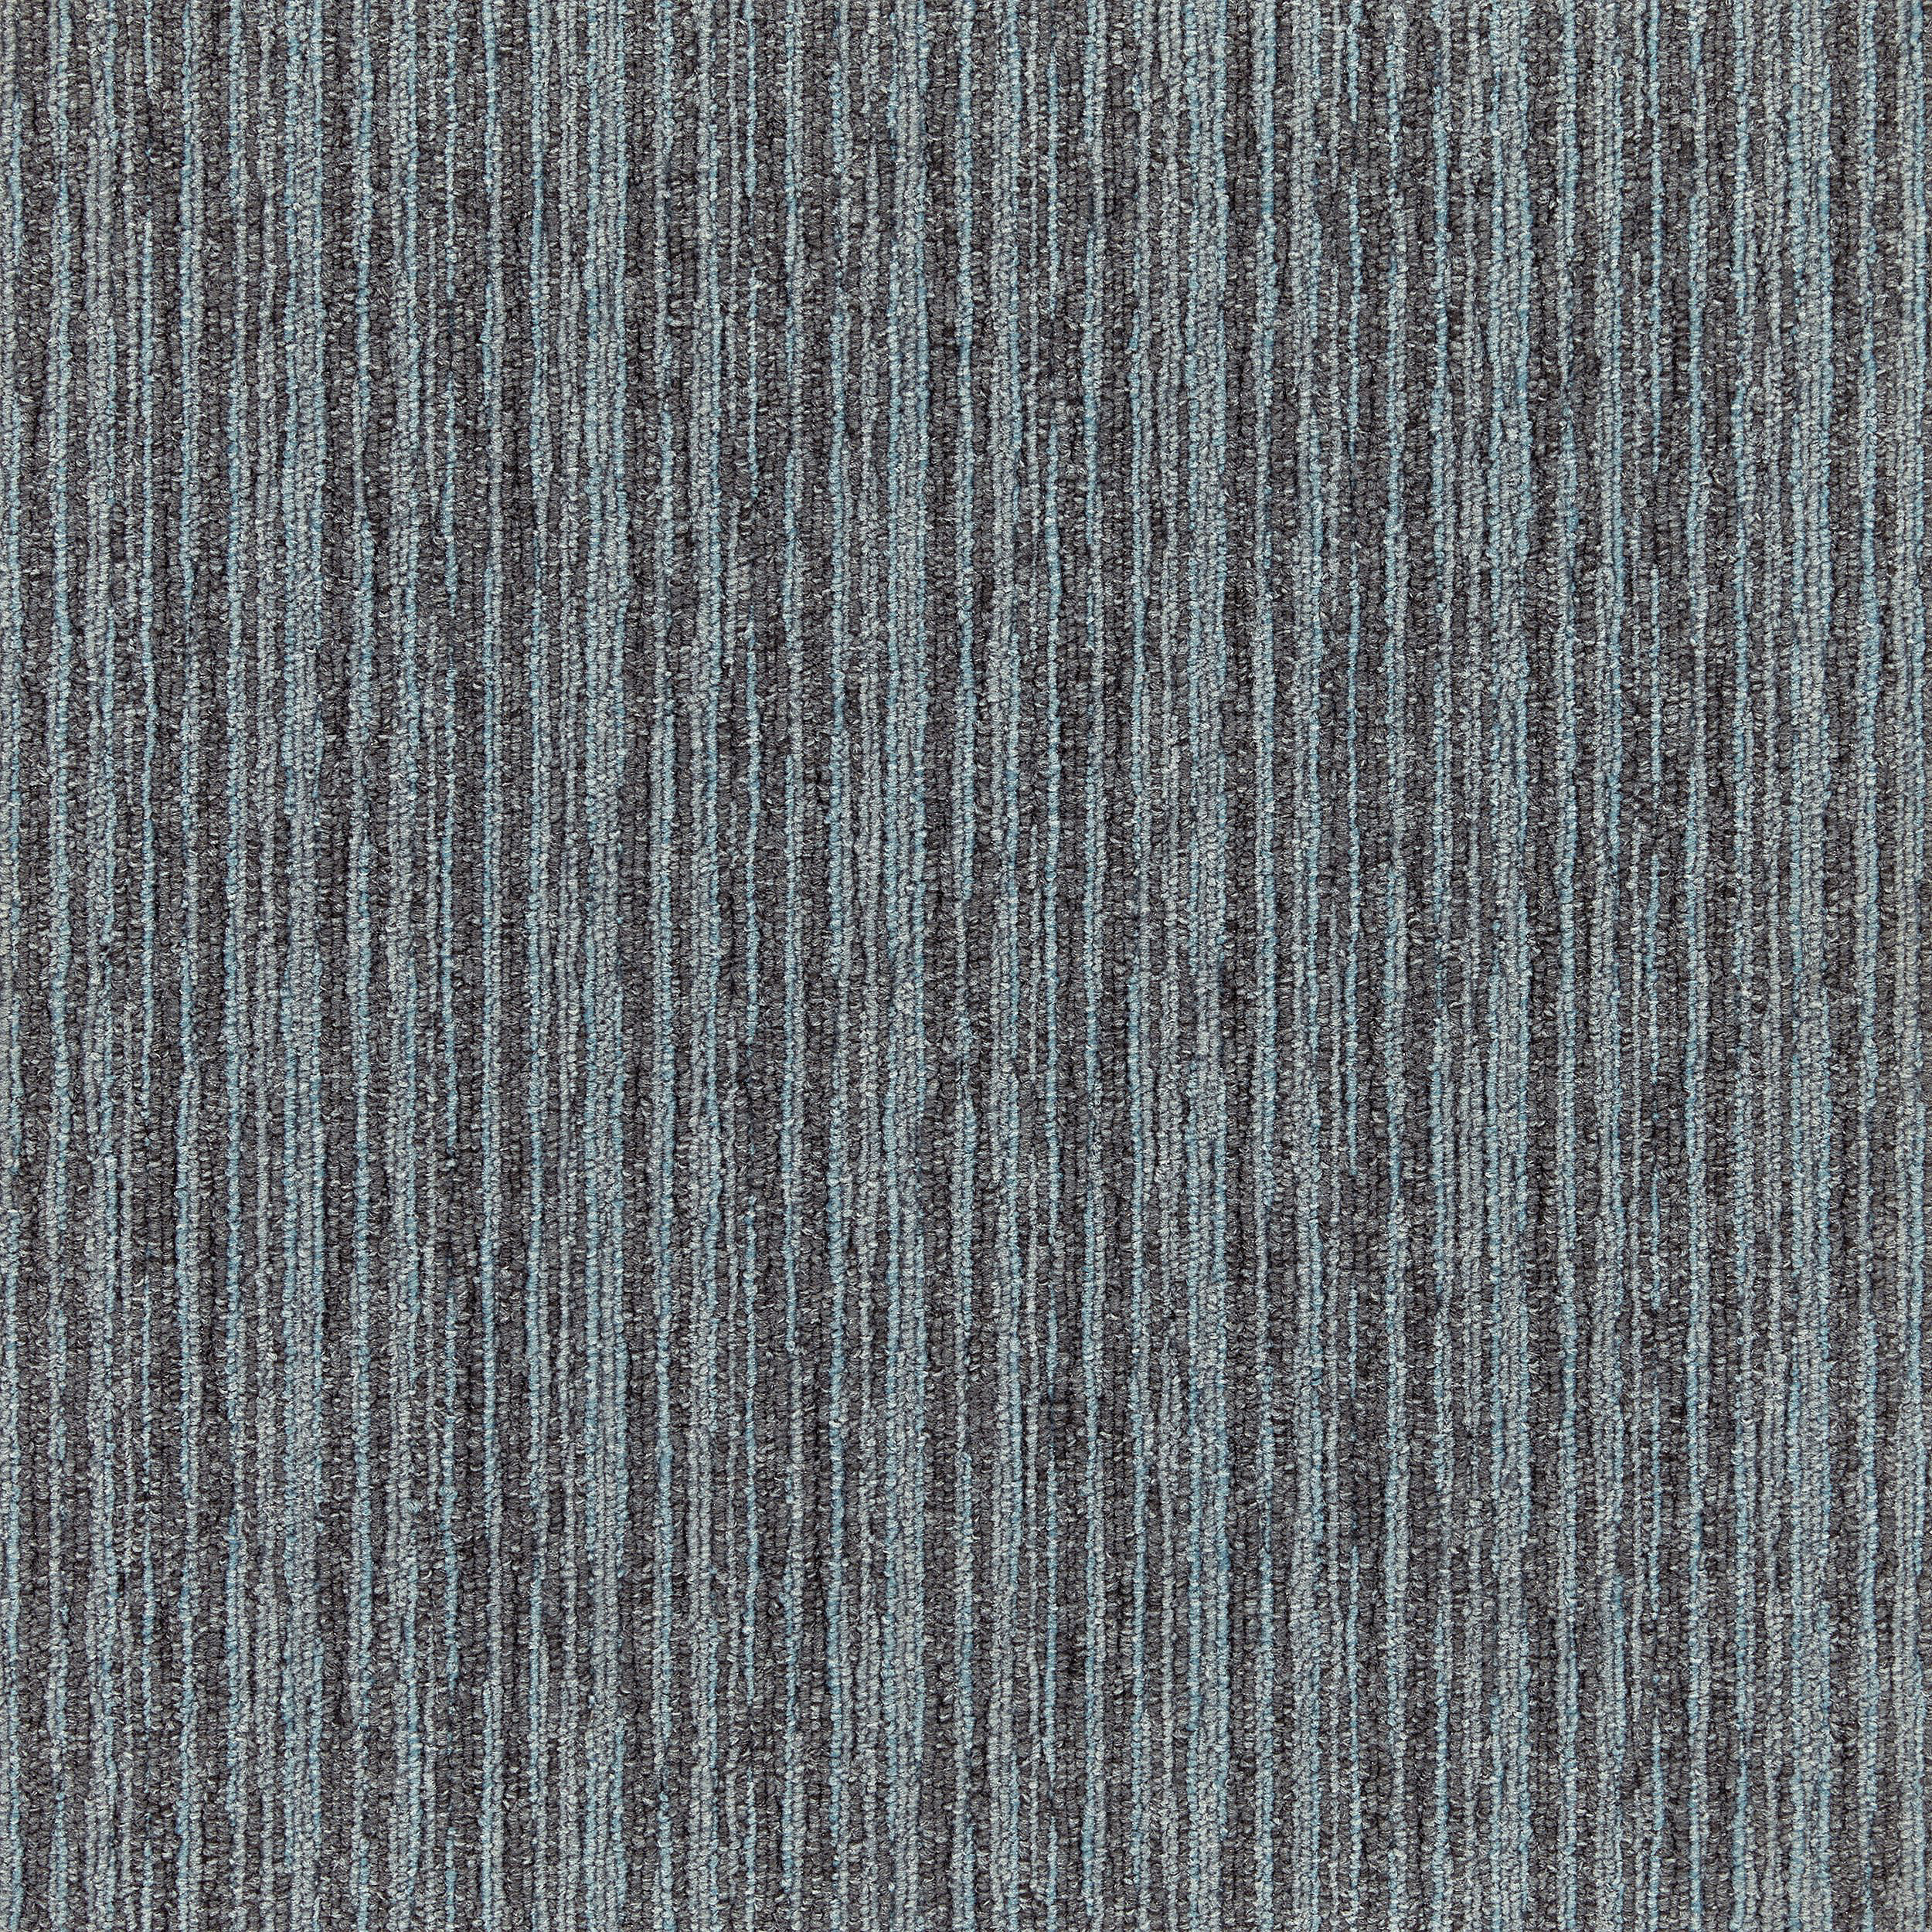 Yuton 105 Carpet Tile In Ice número de imagen 4